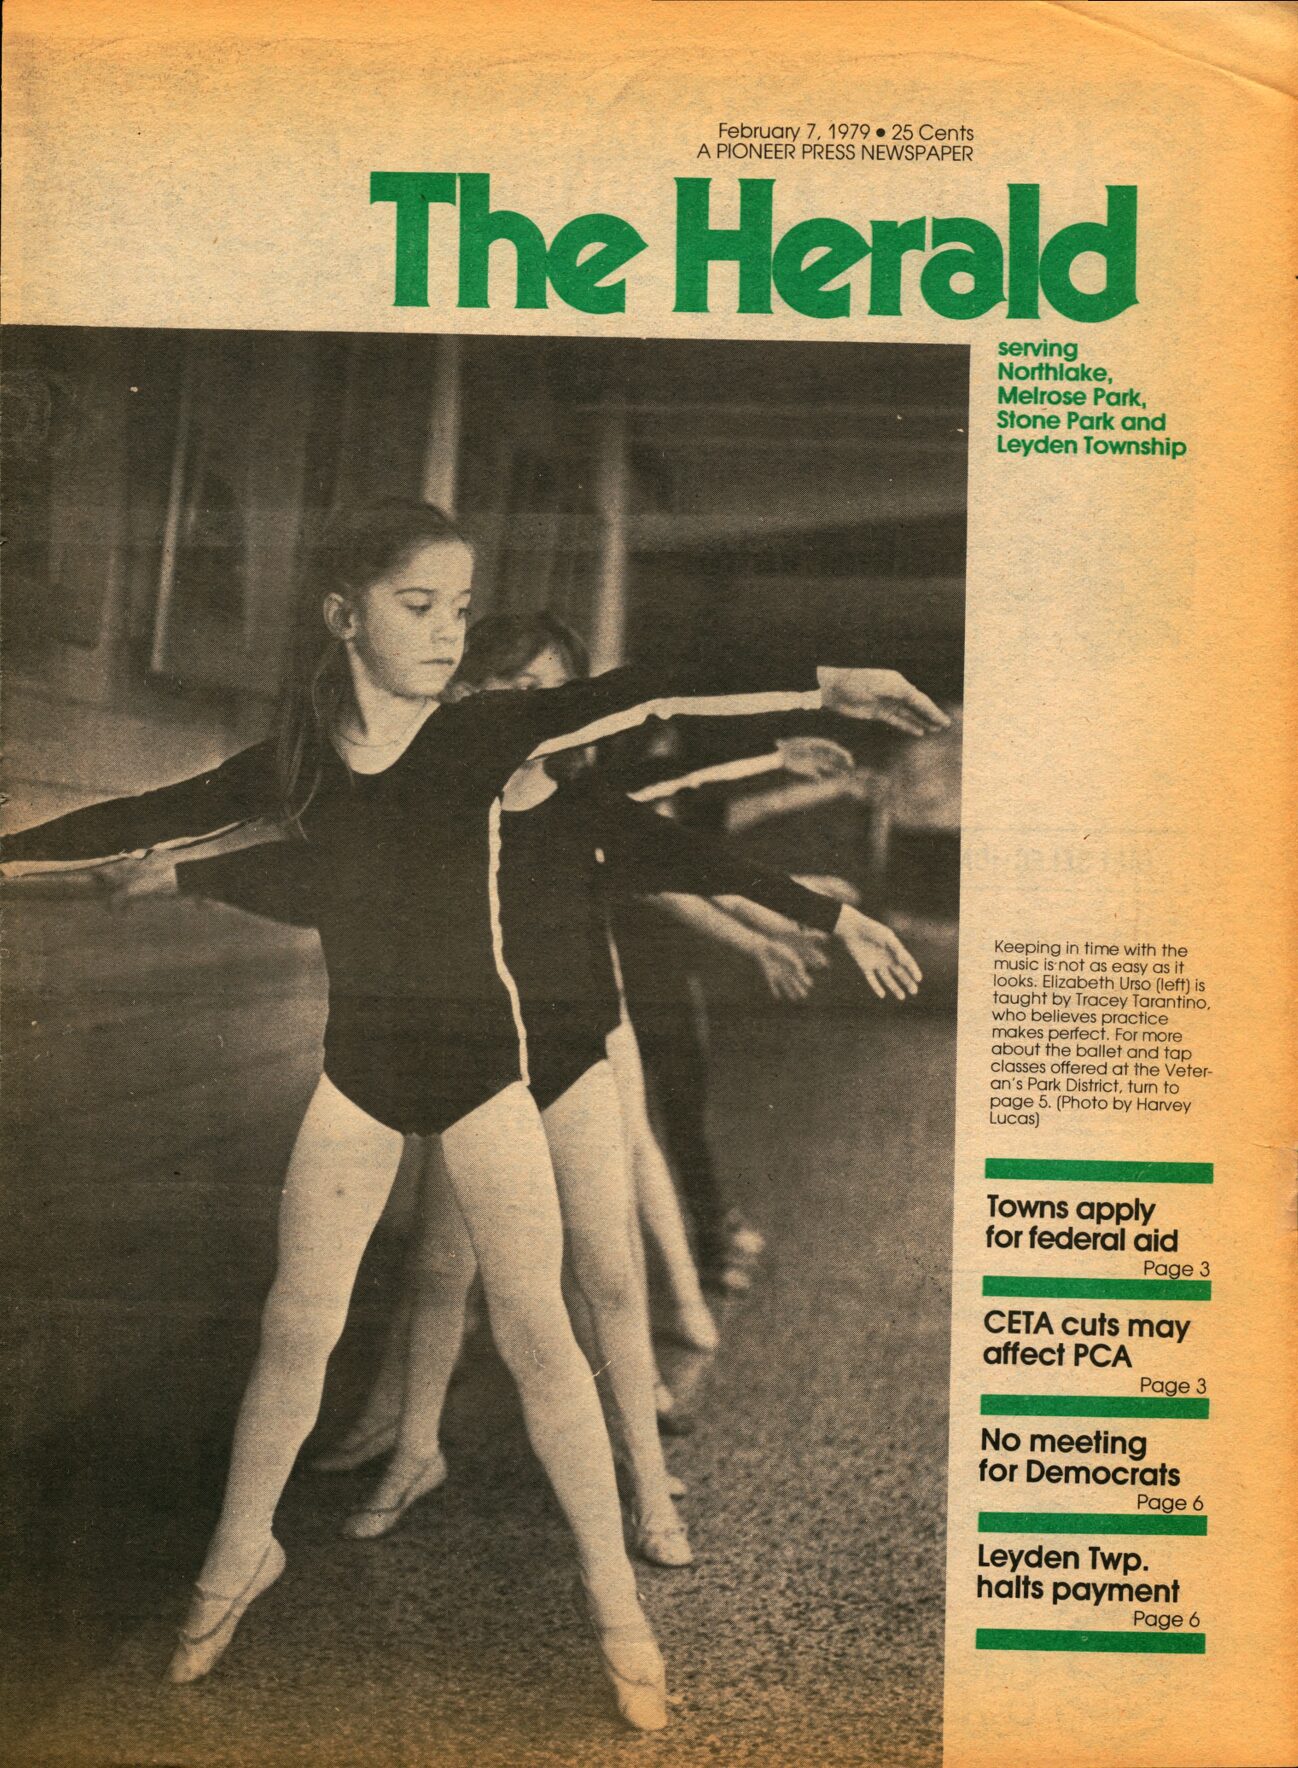 The Herald – 19790207